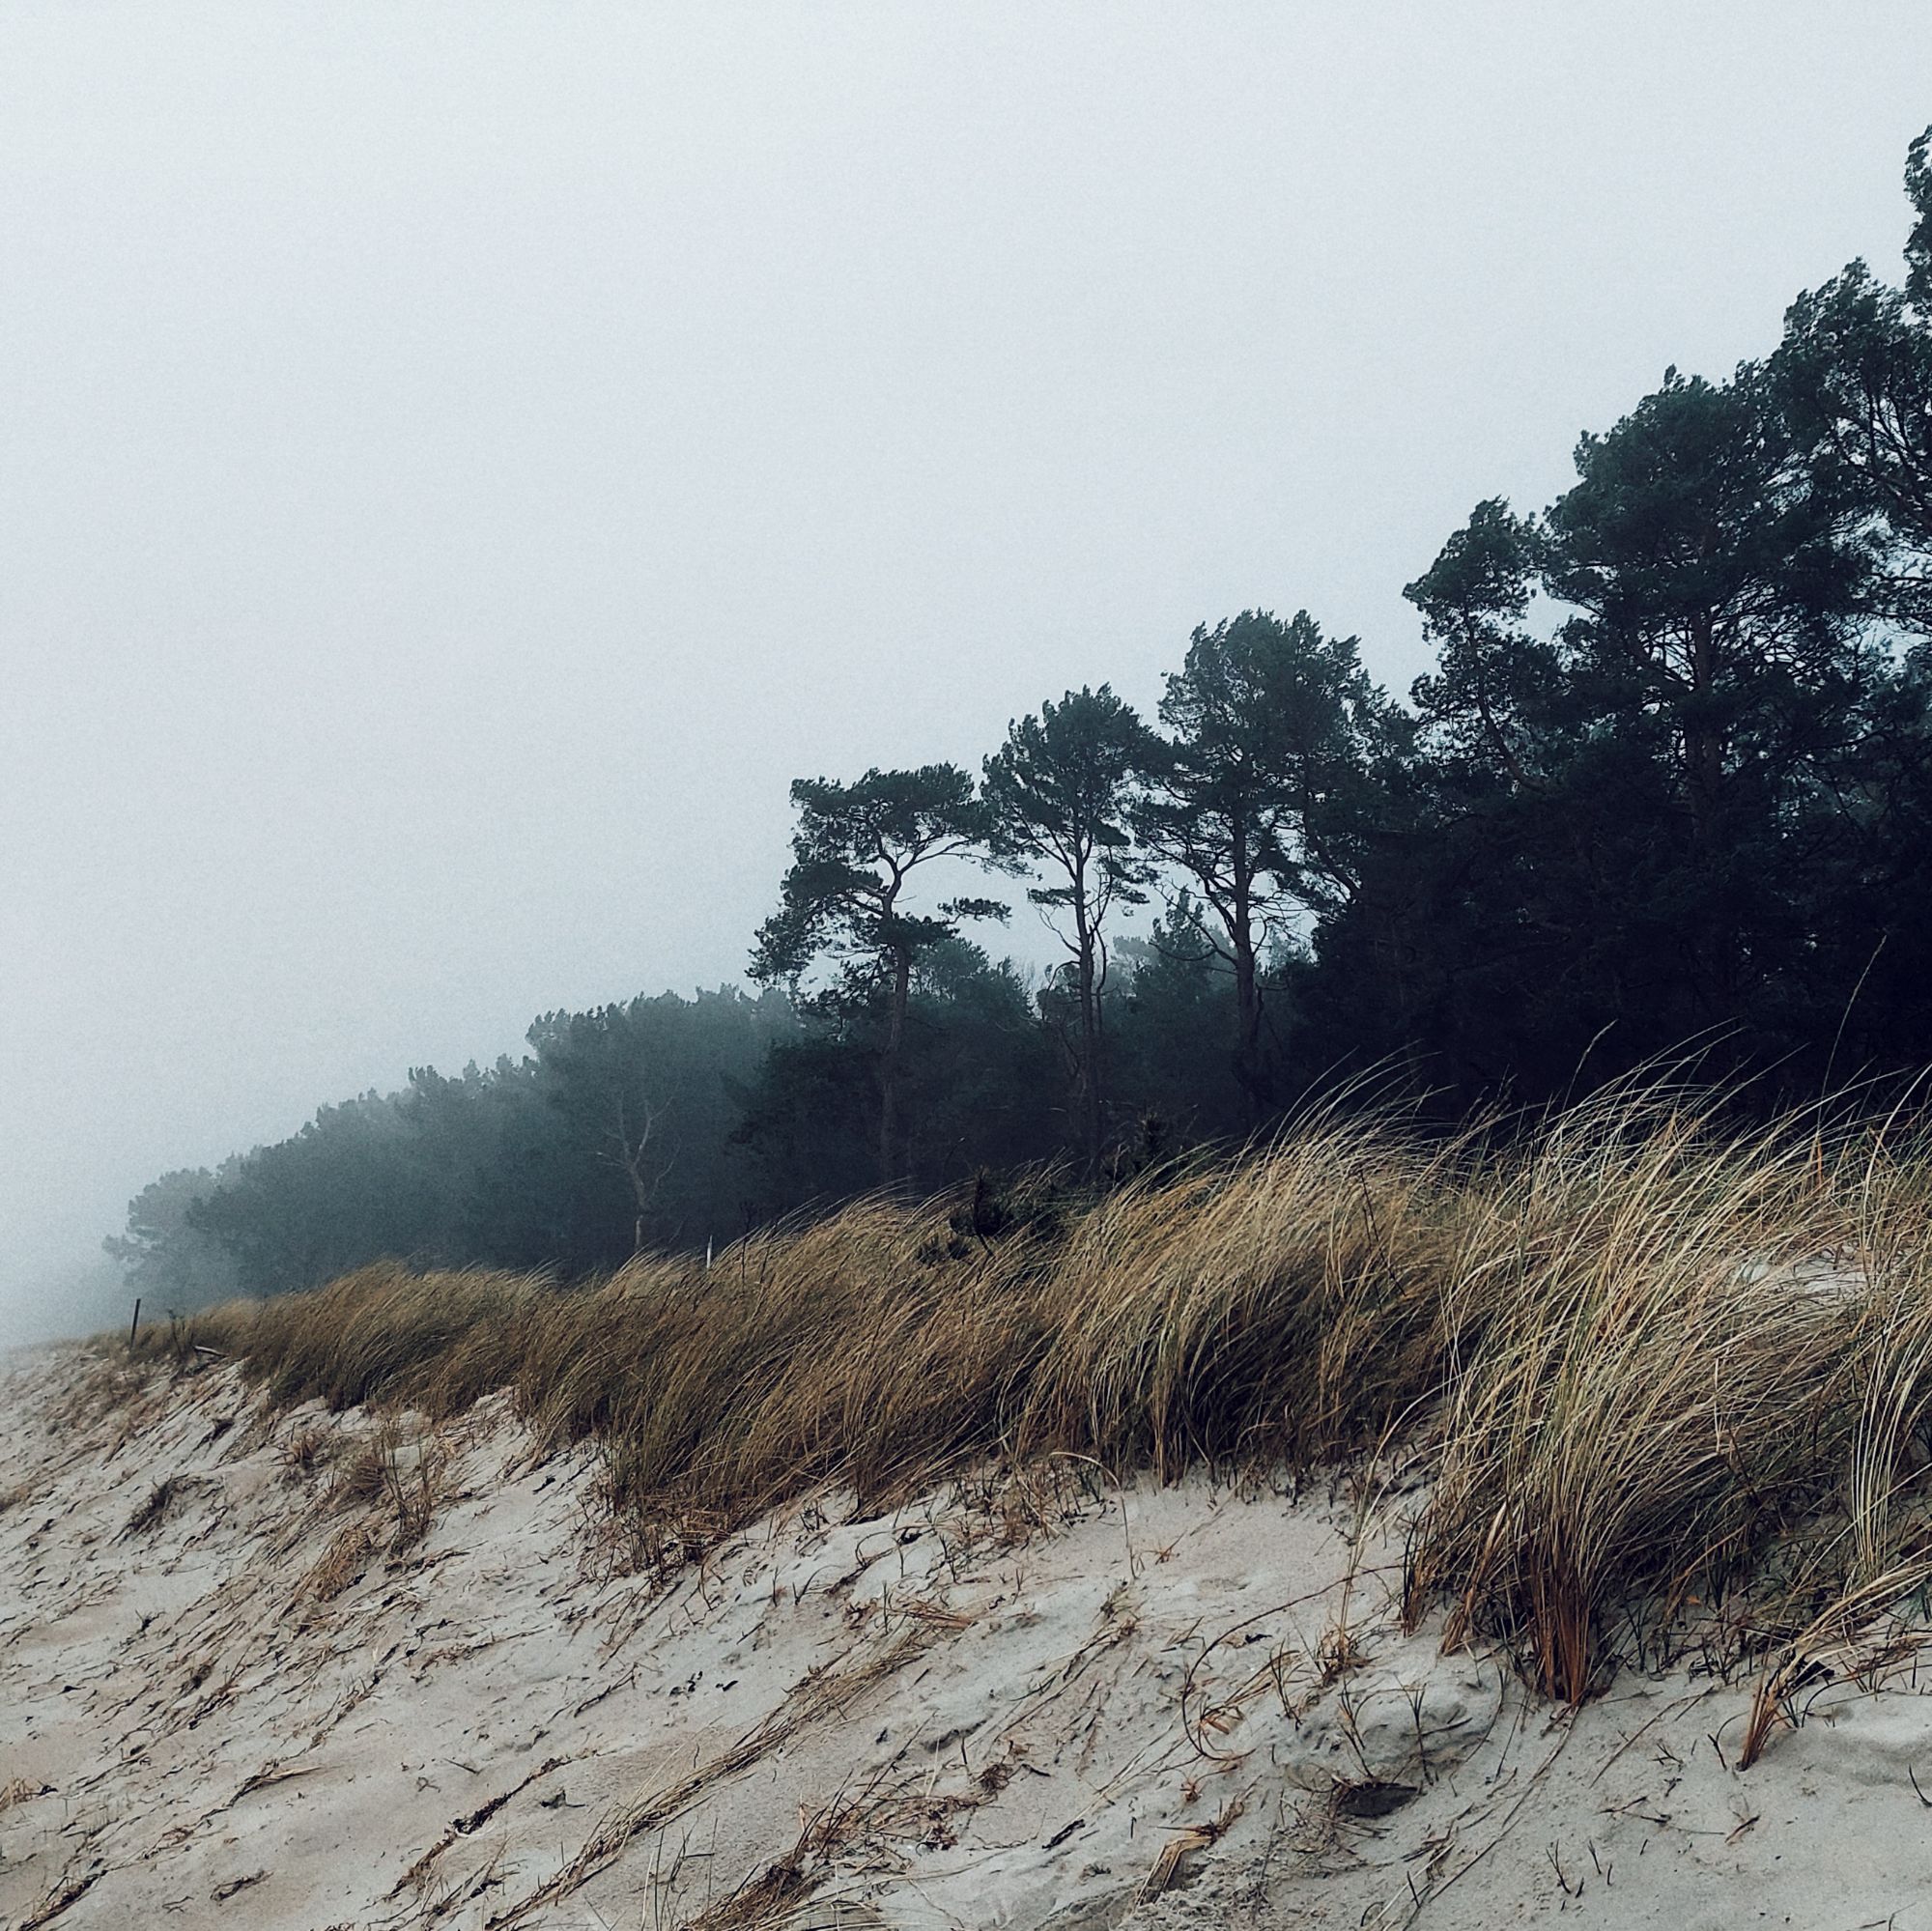 A sandy dune, grass and firs under a grey sky.